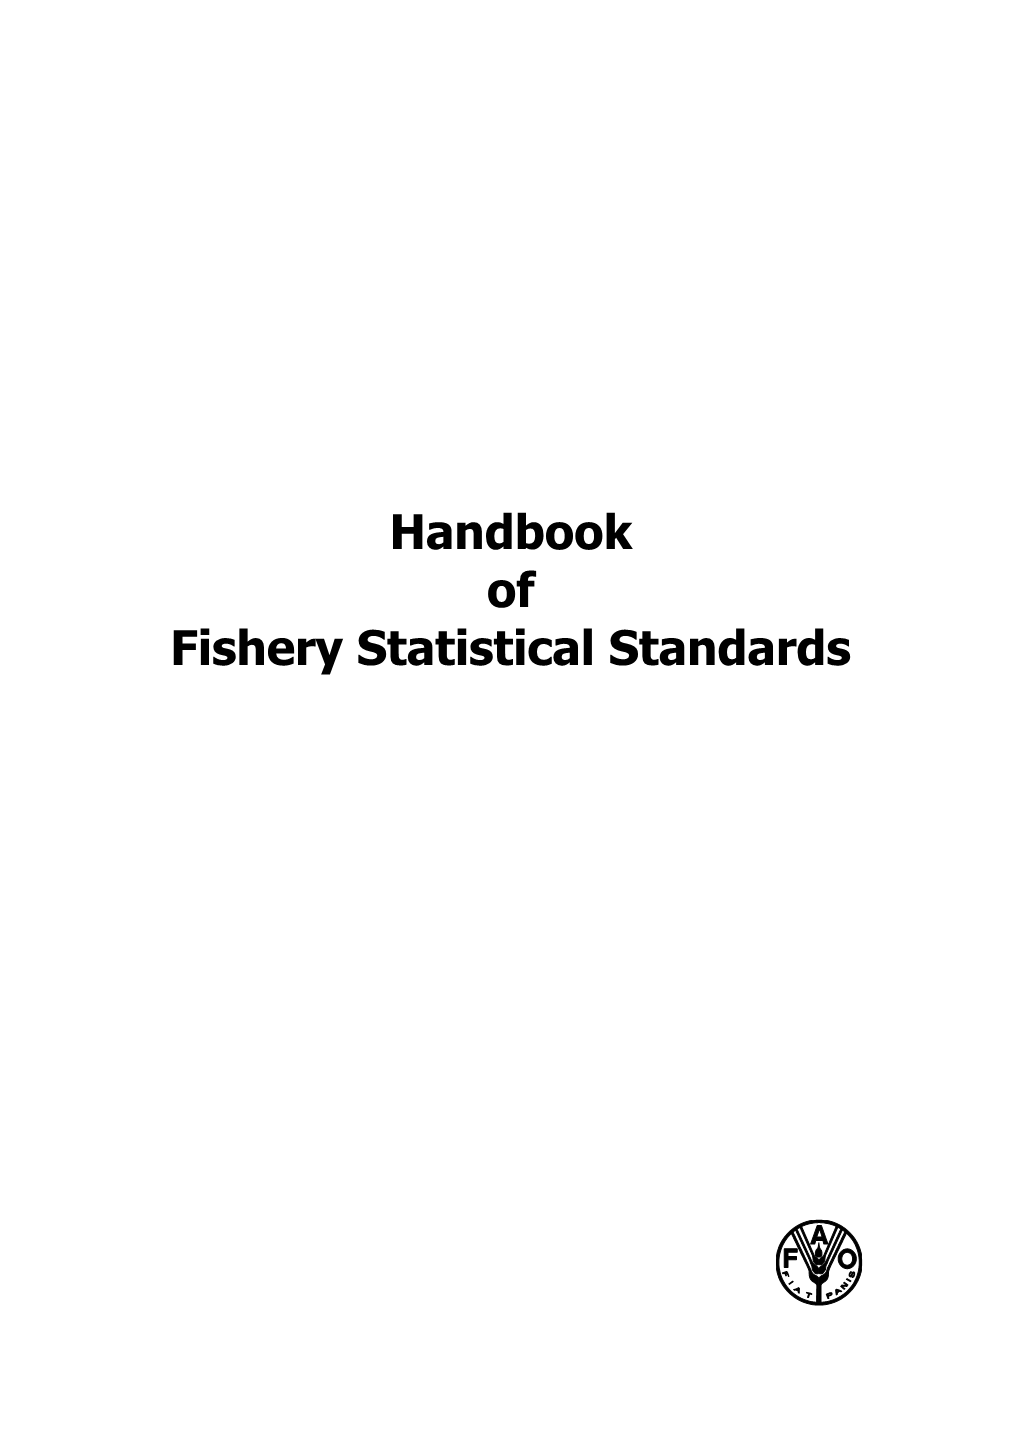 CWP Handbook of Fishery Statistical Standards